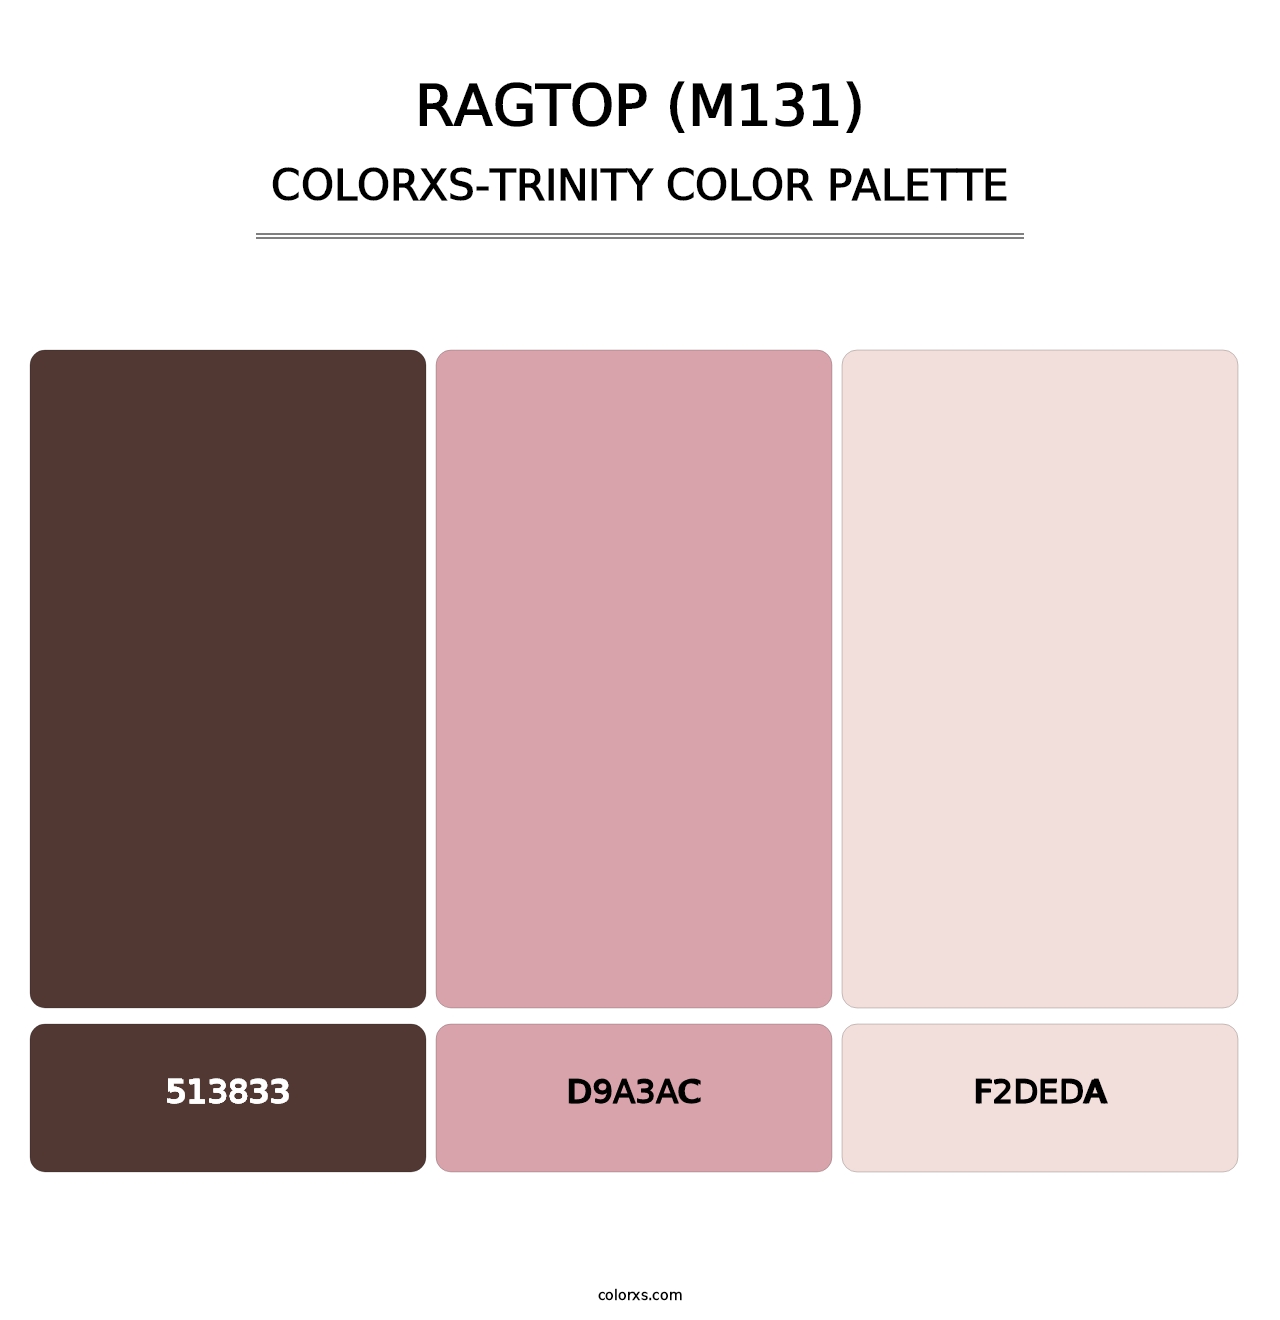 Ragtop (M131) - Colorxs Trinity Palette